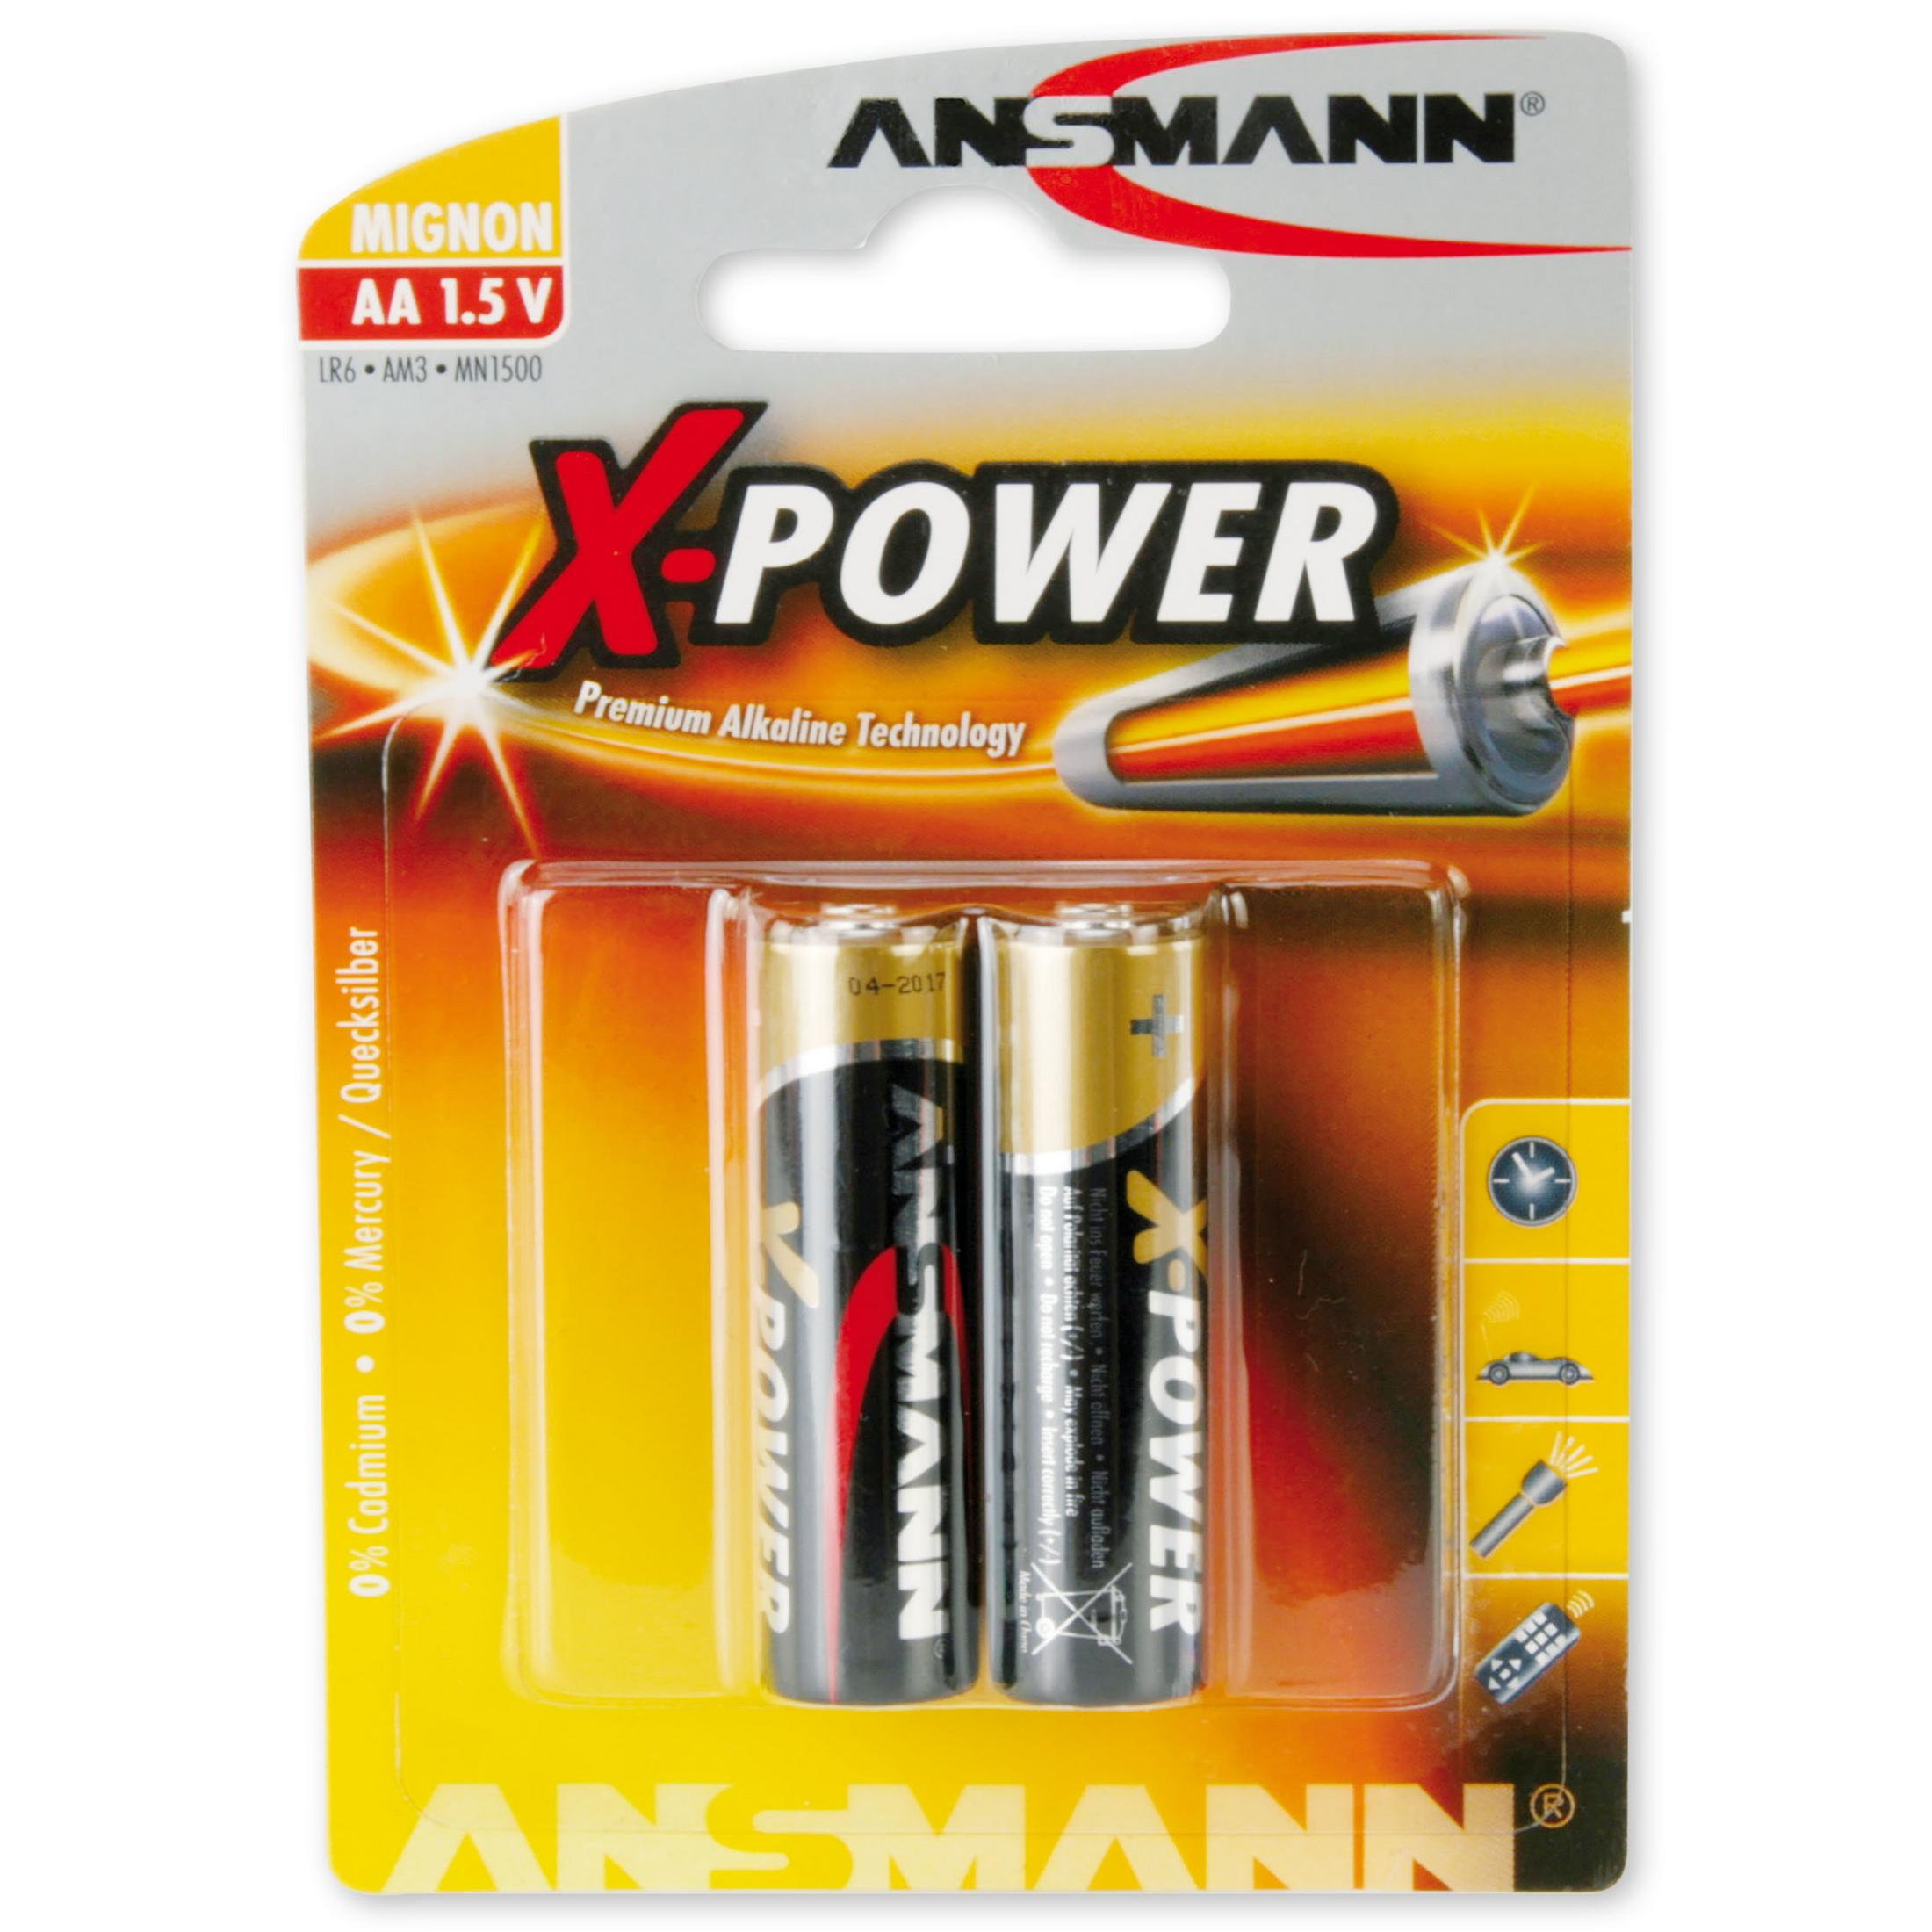 Volt Batterien, Alkaline ANSMANN 2 Mignon 1.5 Alkaline, 5015613 ANSMANN Strom Stück AA, Batterie / Batterien 2er-Pack Energie